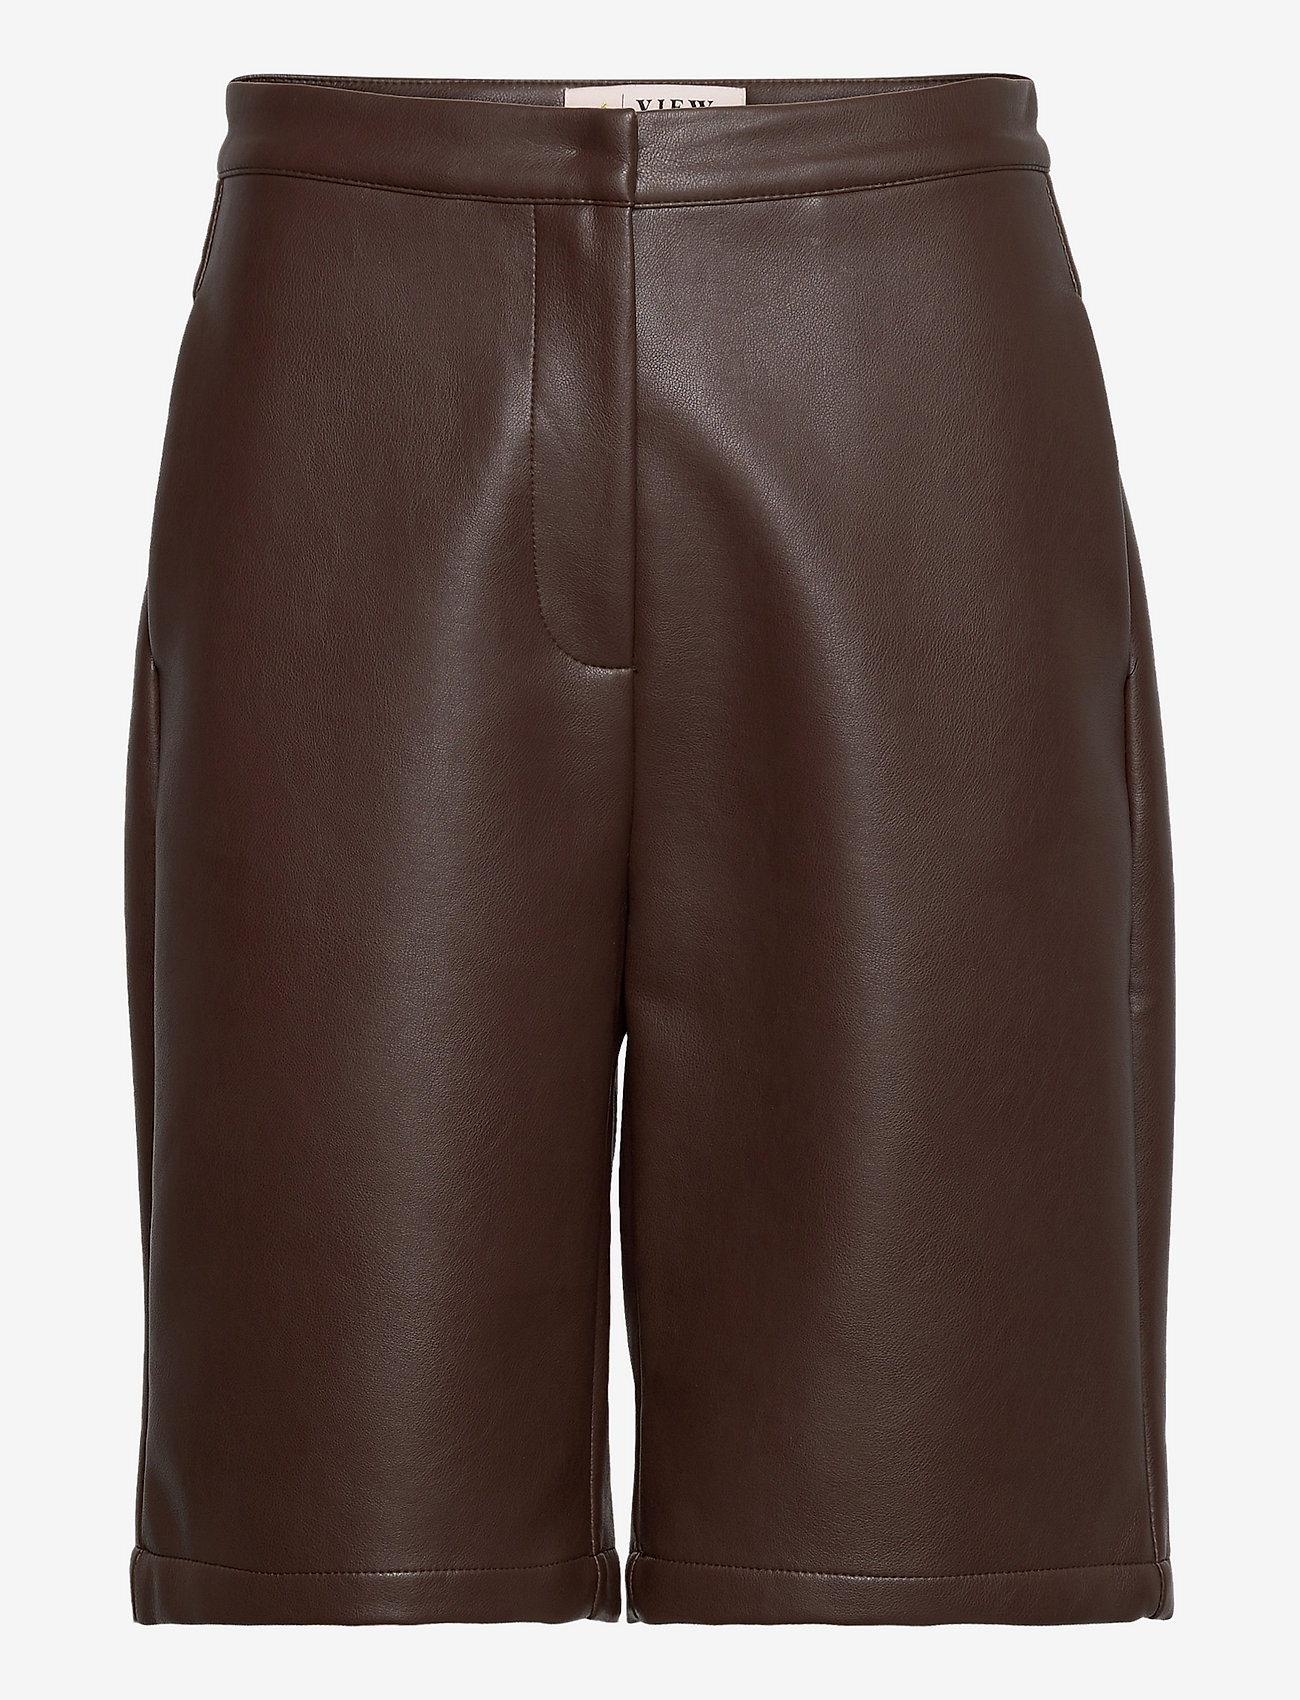 A-View - Aya leather shorts - nahkashortsit - brown - 0